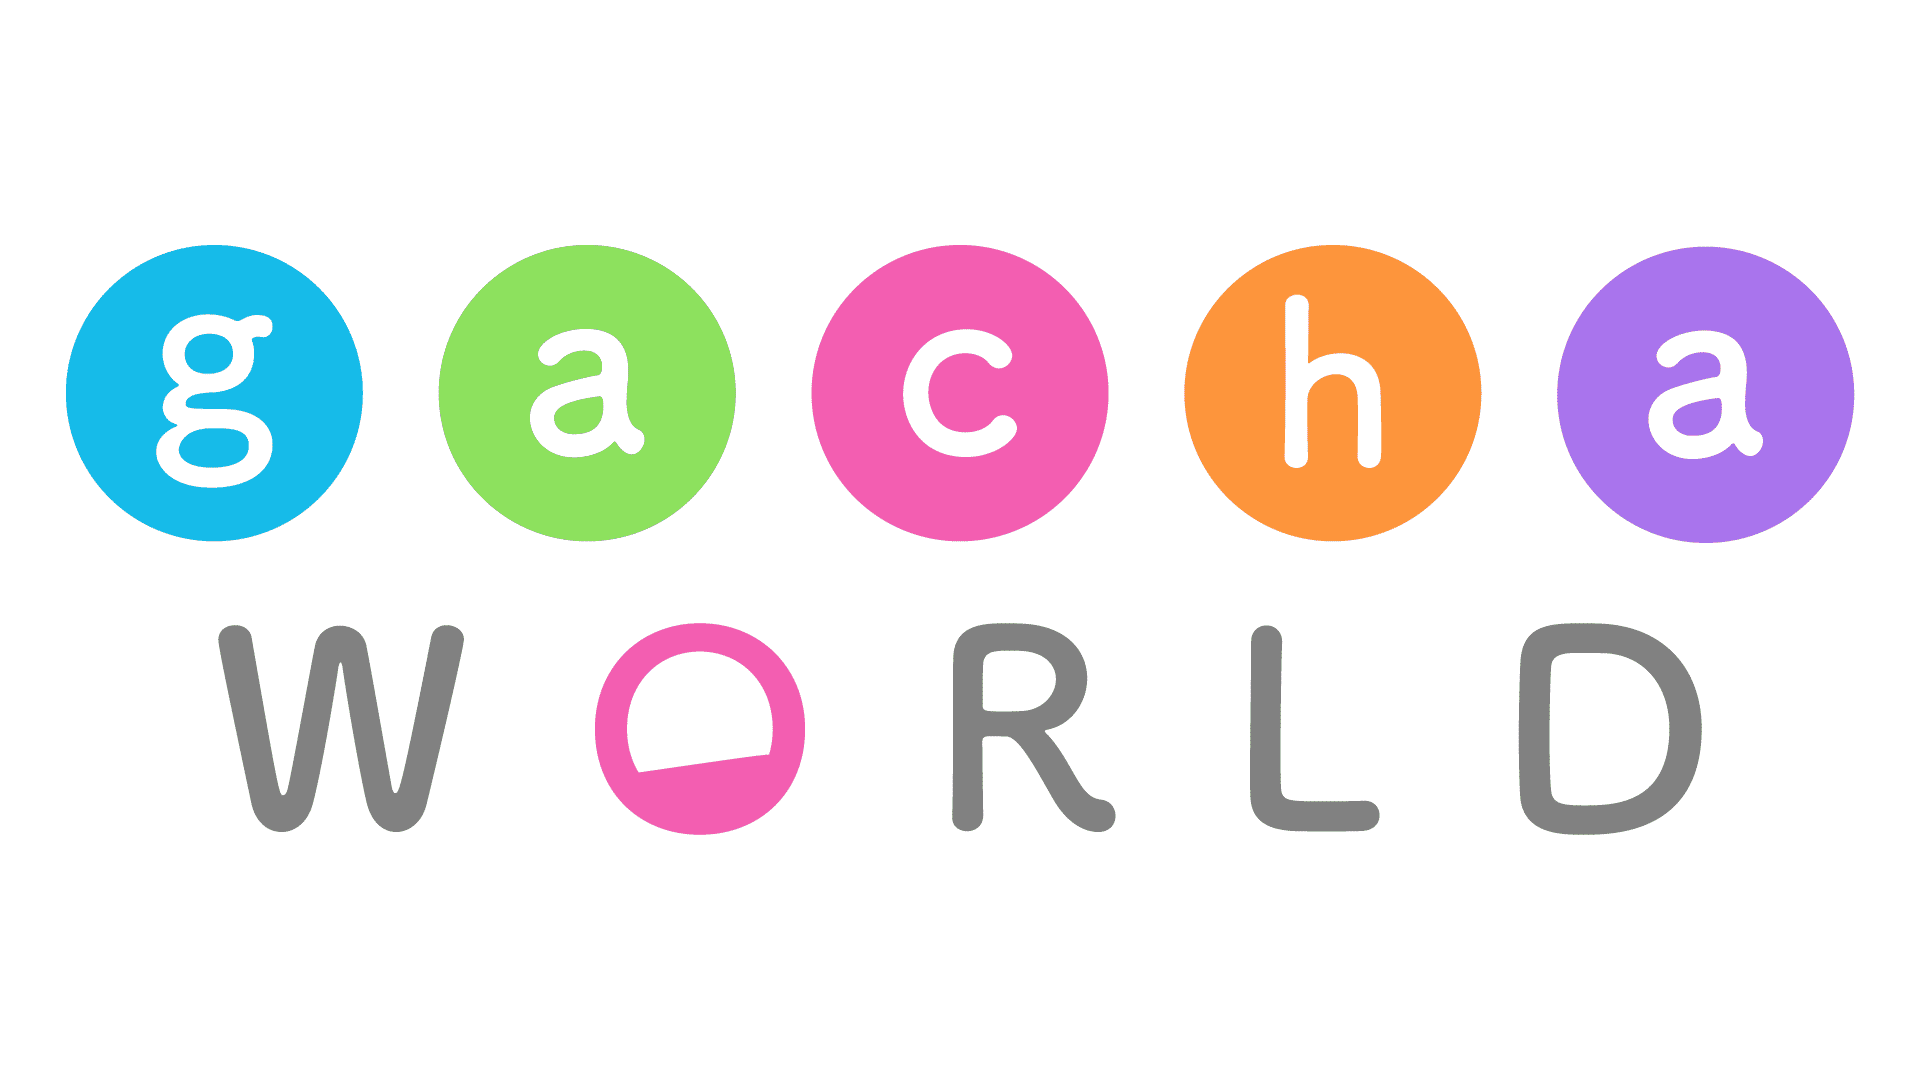 Gacha World: Games & Prizes (@GachaWorld_Info) / X